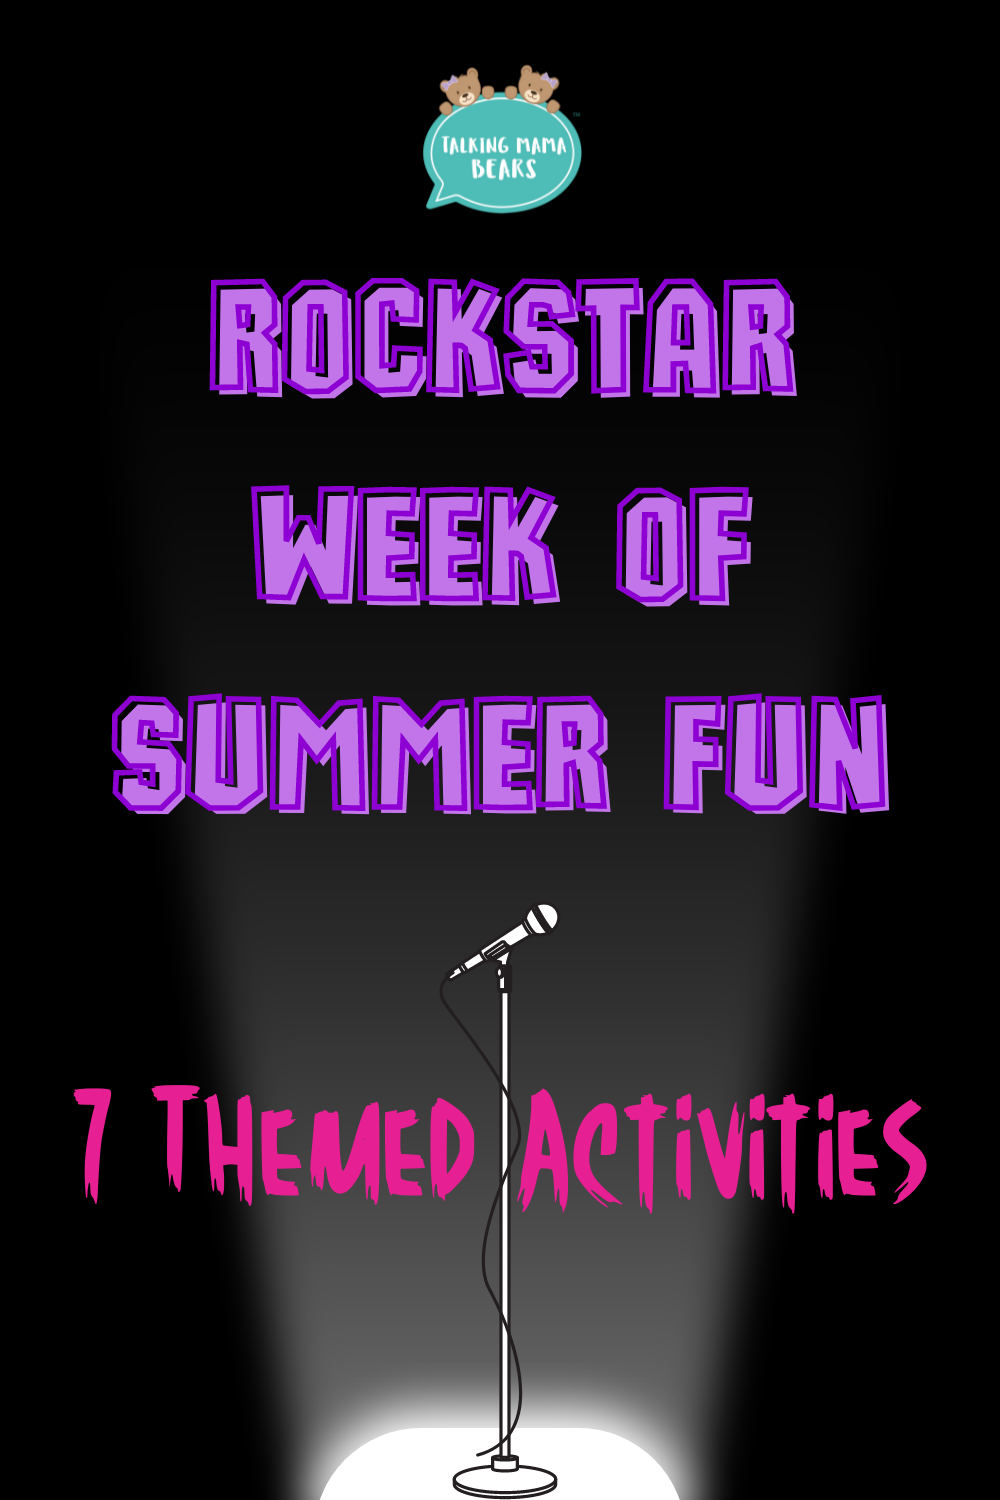 Fun summer rockstar themed week